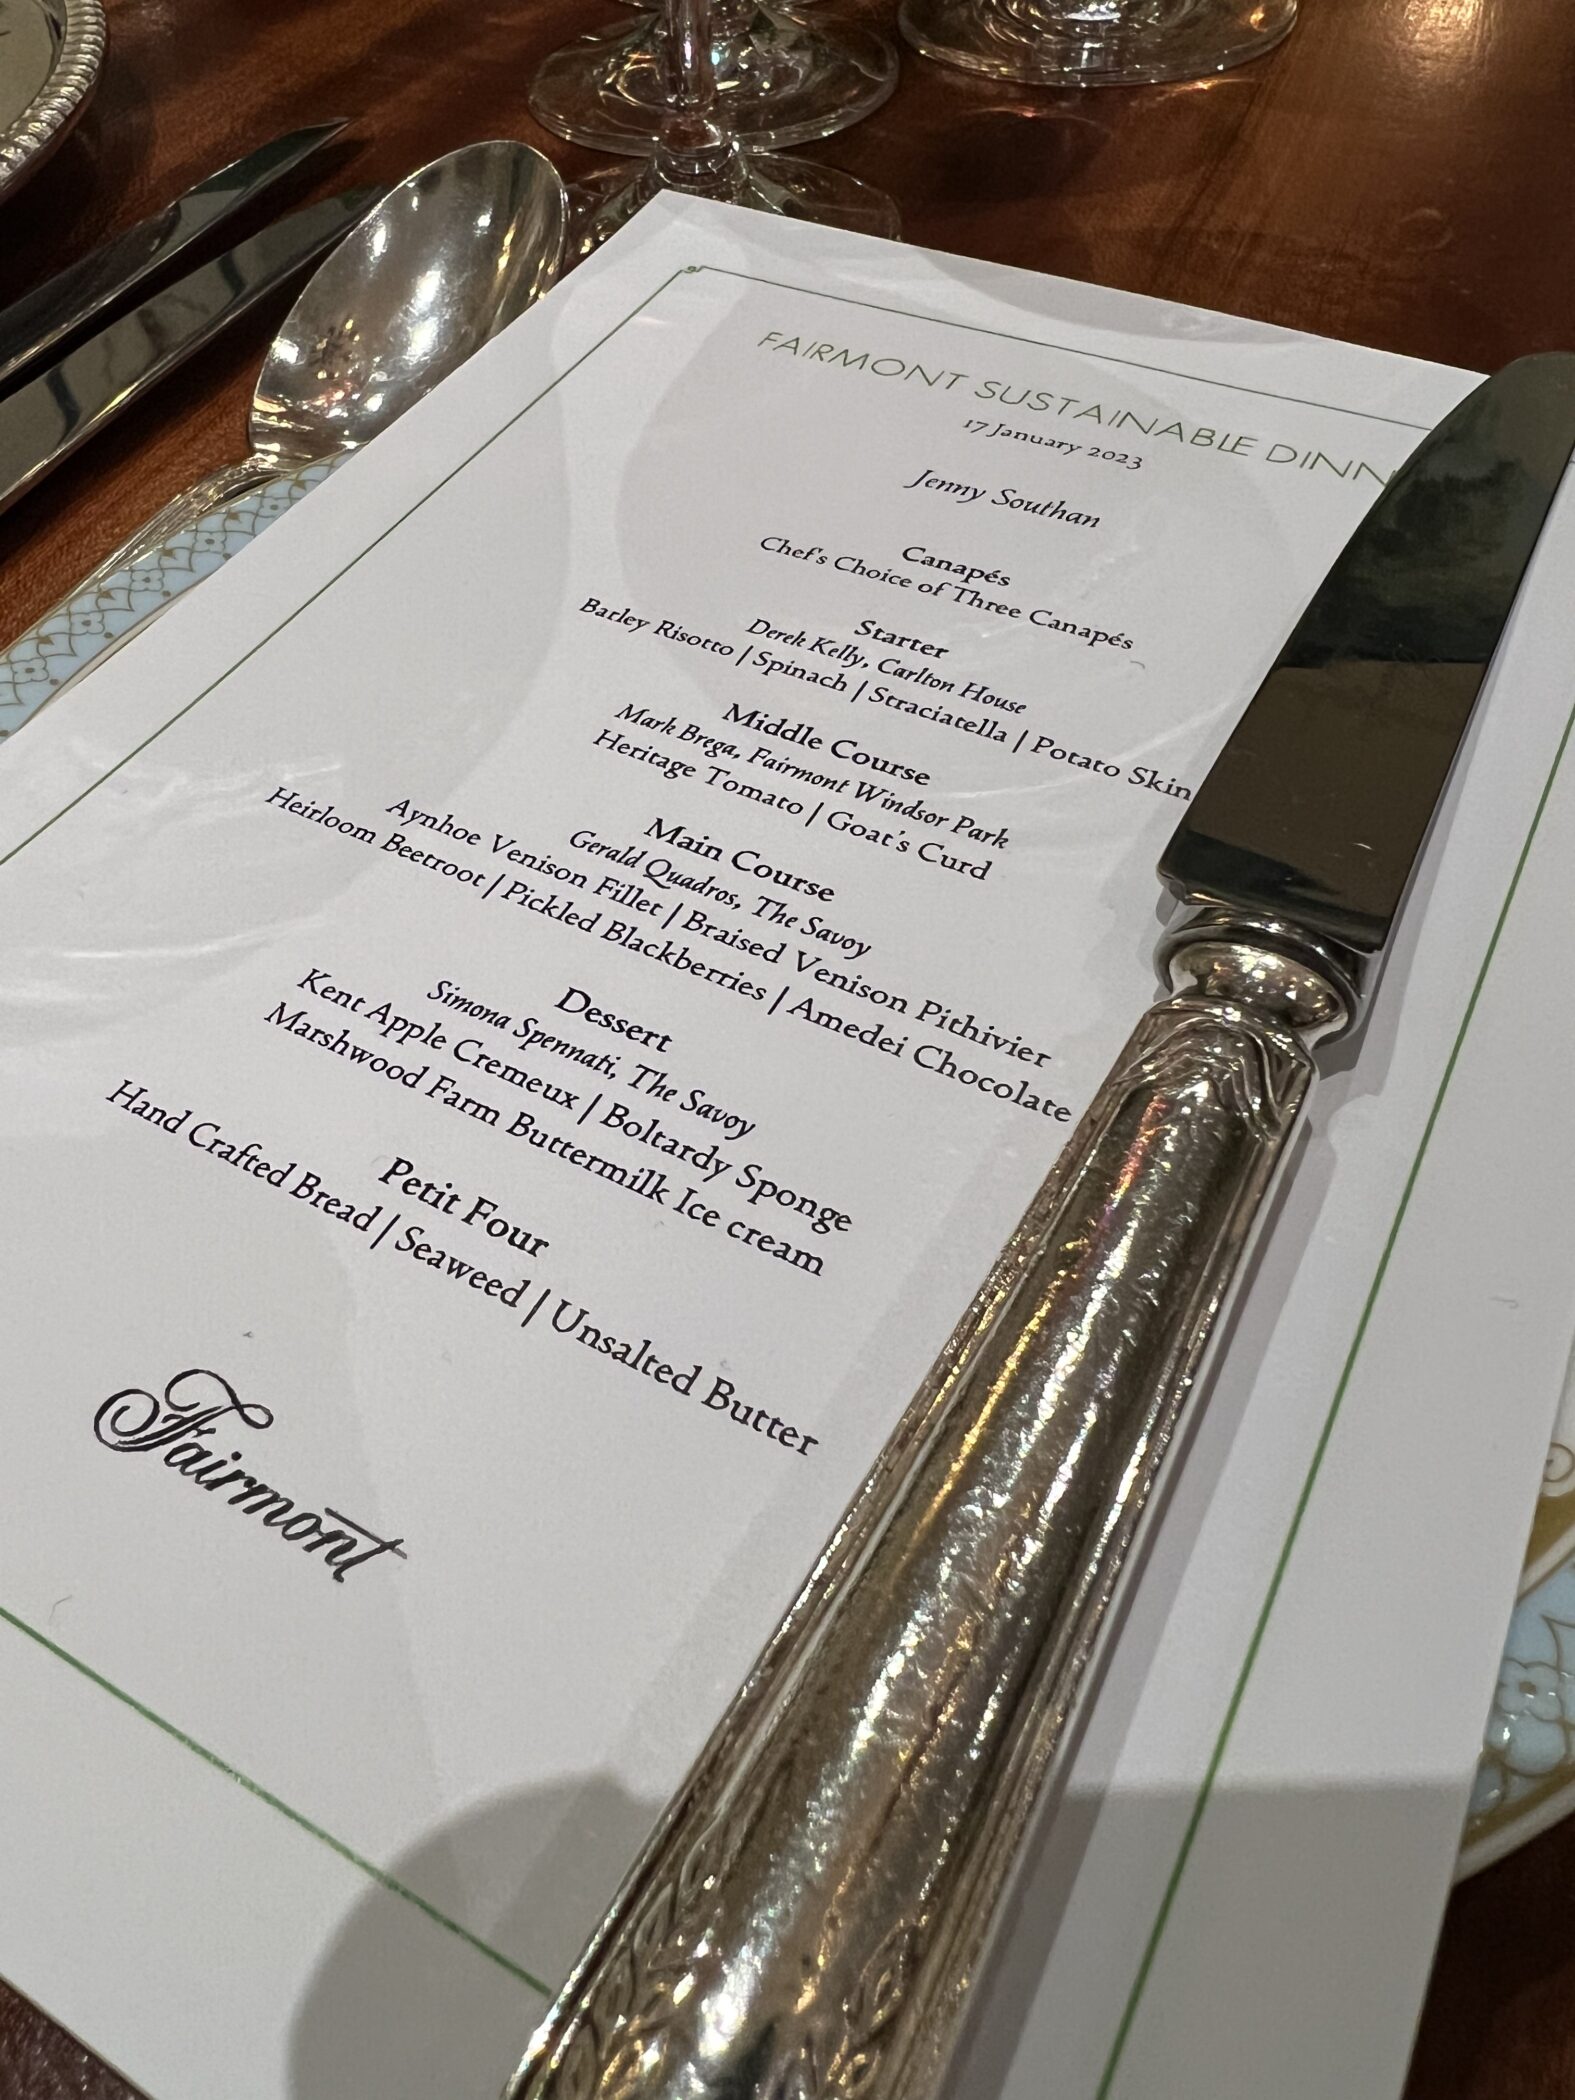 Fairmont sustainable menu at the Savoy